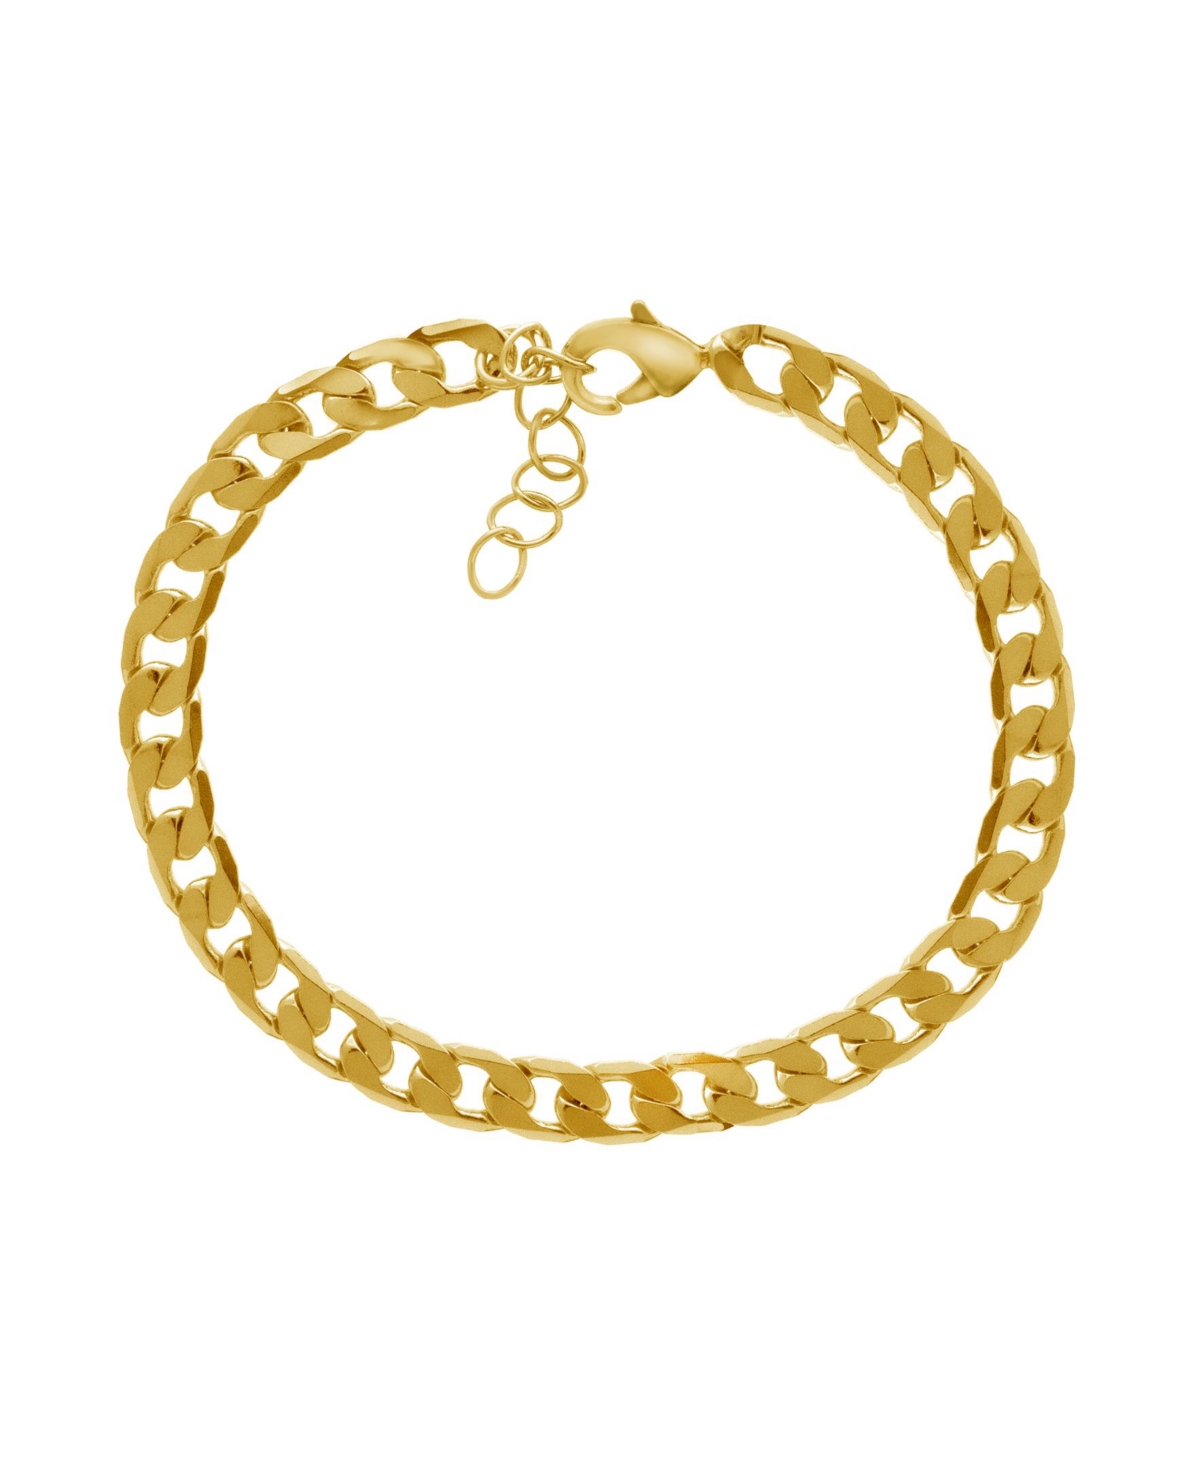 18k Gold Plated Curb Link Bracelet - Gold-Plated